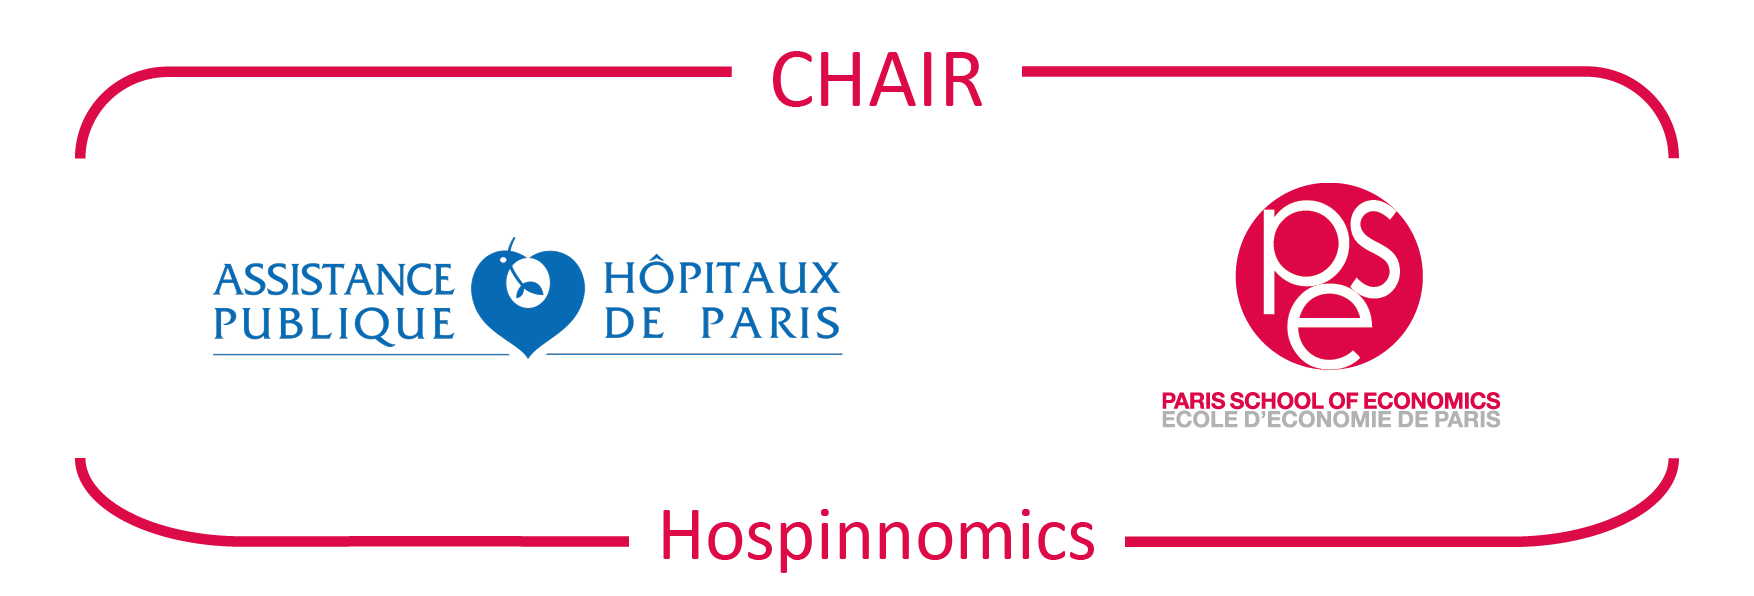 Hospinnomics Chair